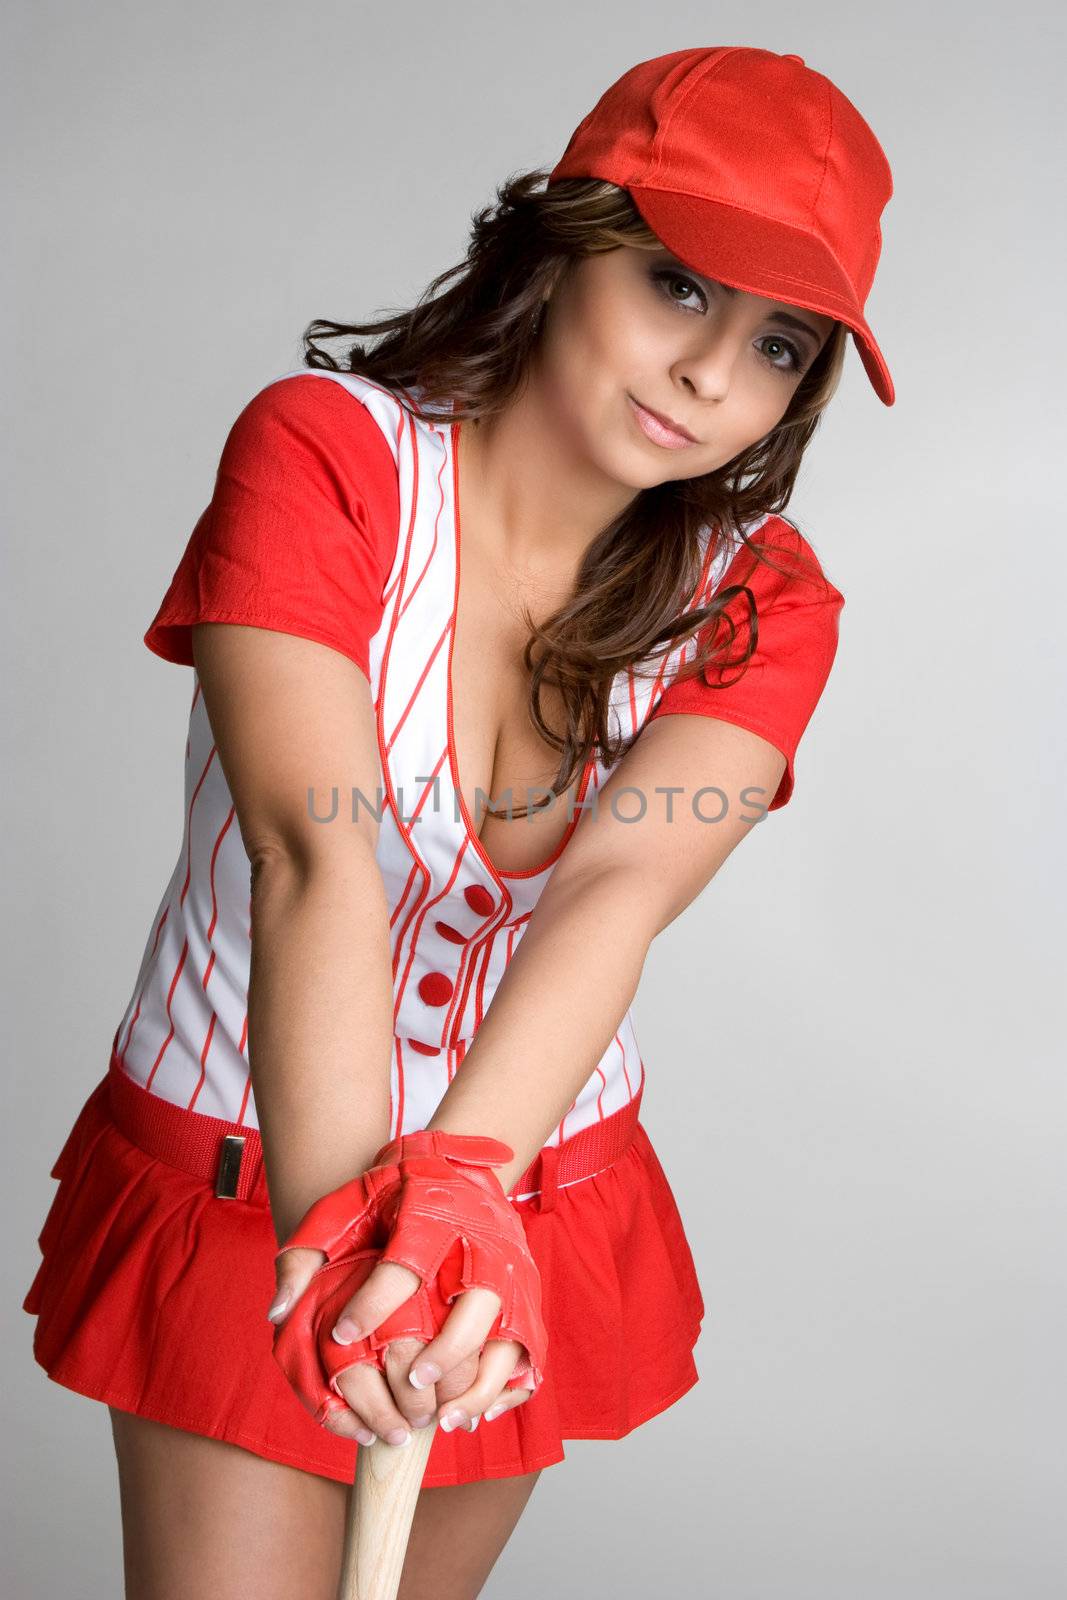 Pretty girl wearing baseball uniform